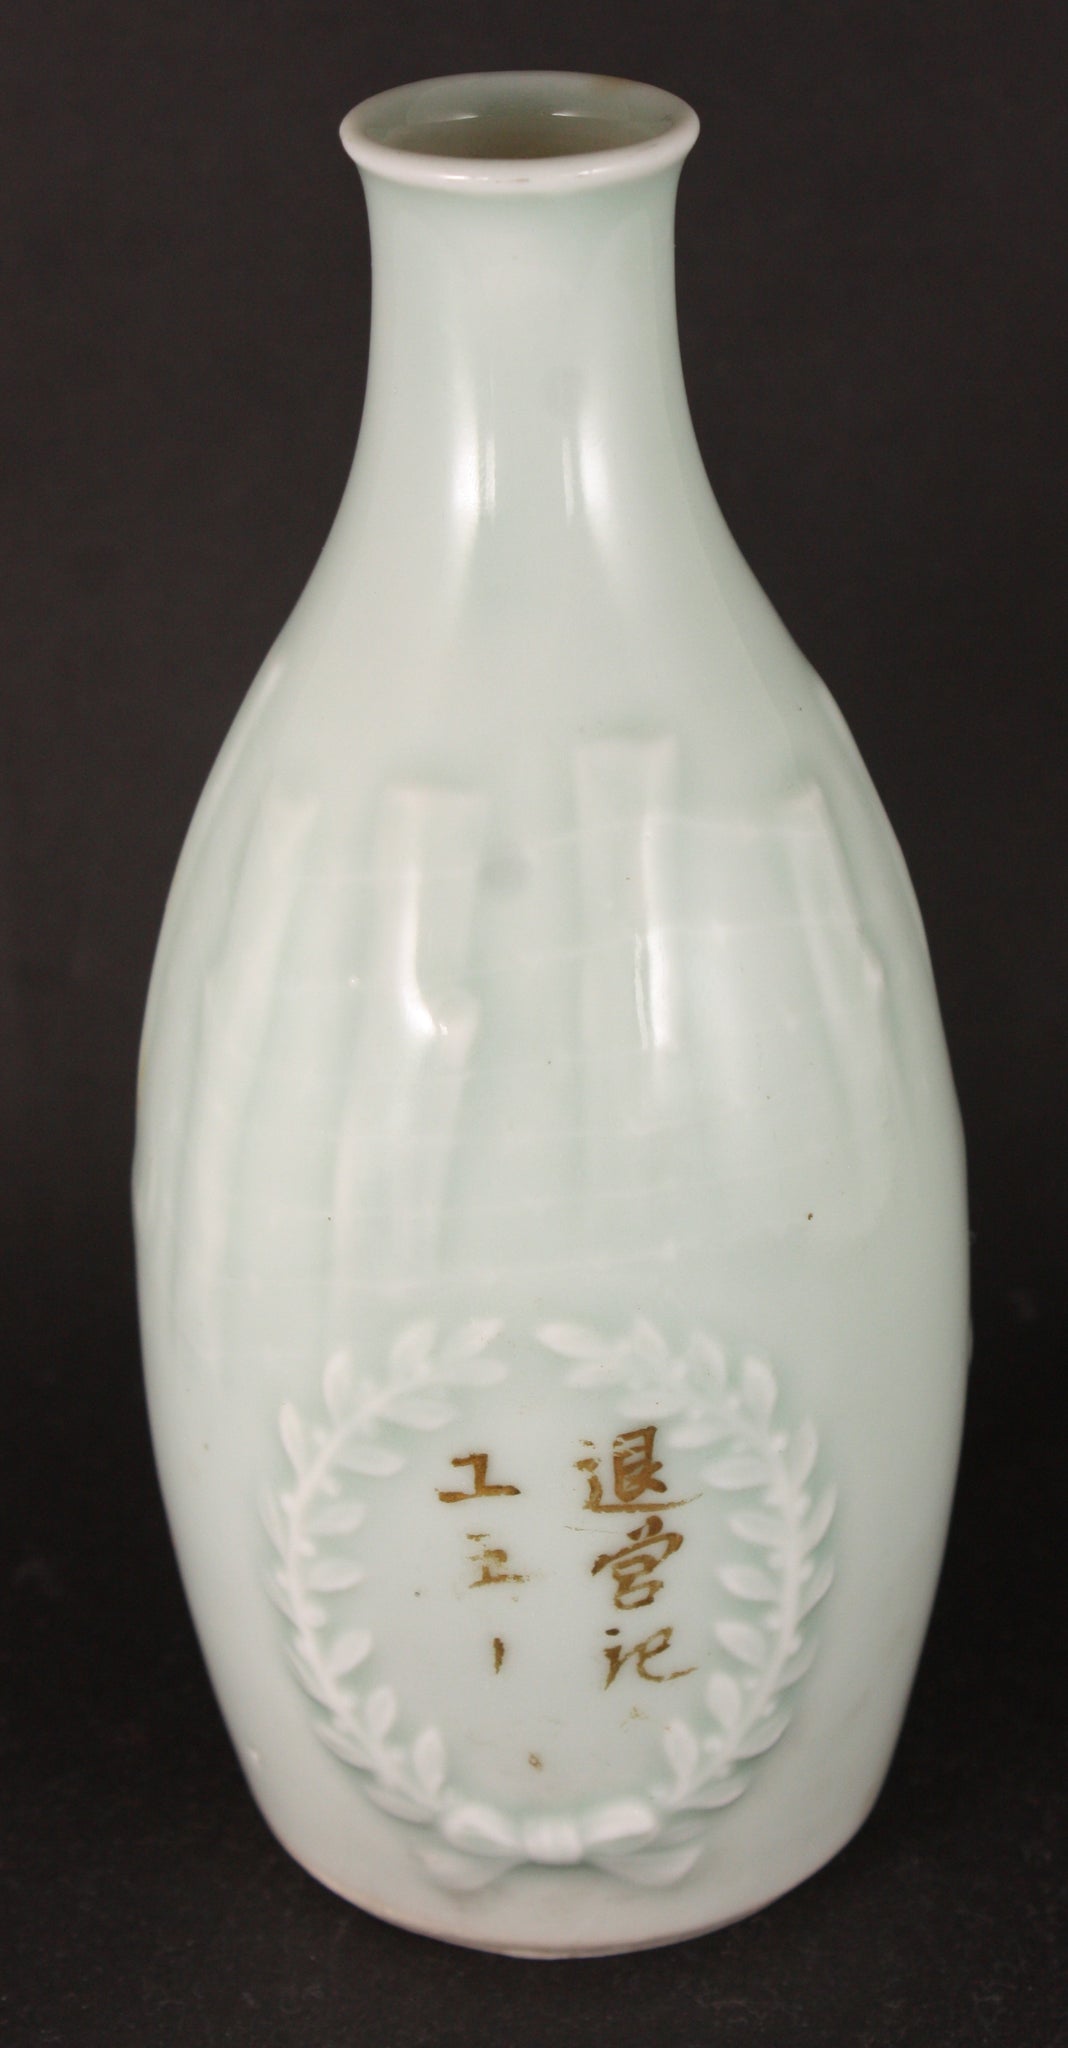 Very Rare Antique Japanese Military Three Human Bombs Shanghai Incident Army Sake Bottle